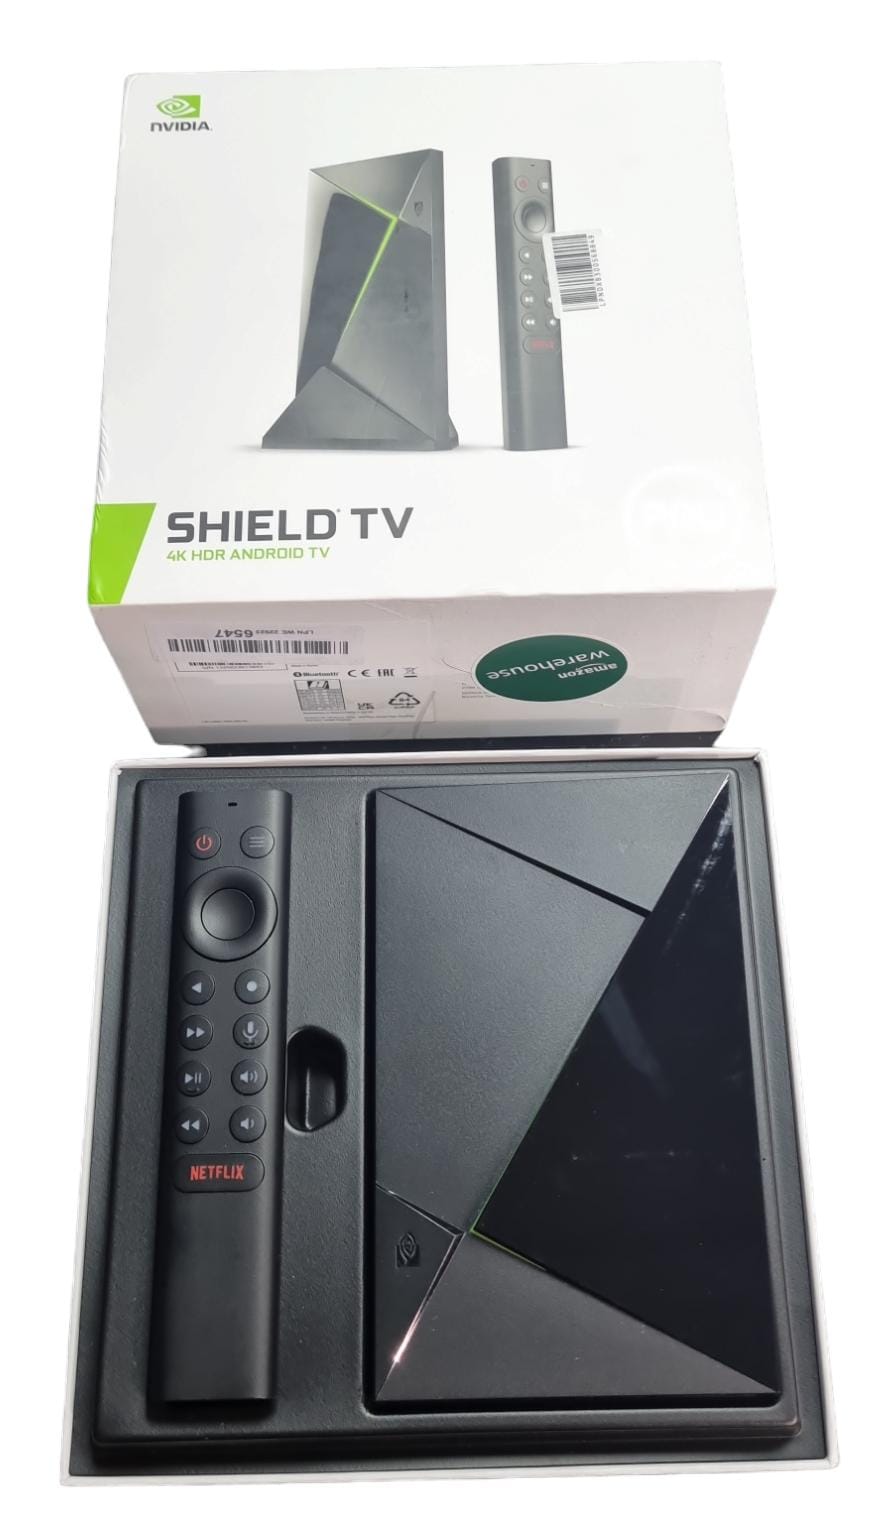 NVIDIA Shield TV Pro - 4K HDR Android TV - Boxed